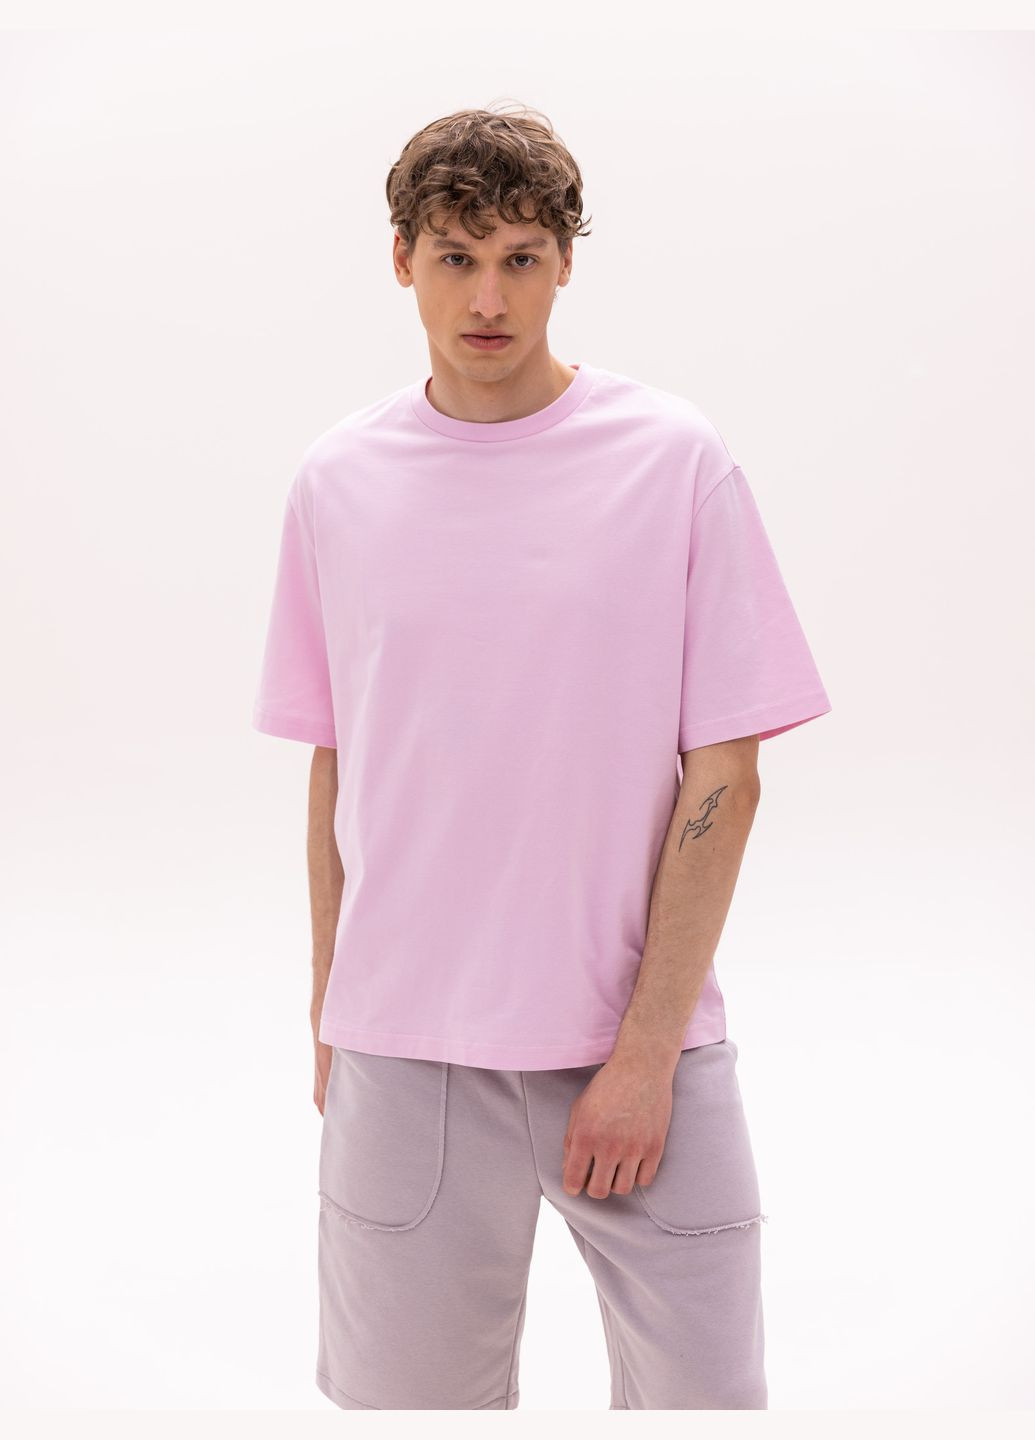 Розовая футболка мужская с коротким рукавом Роза